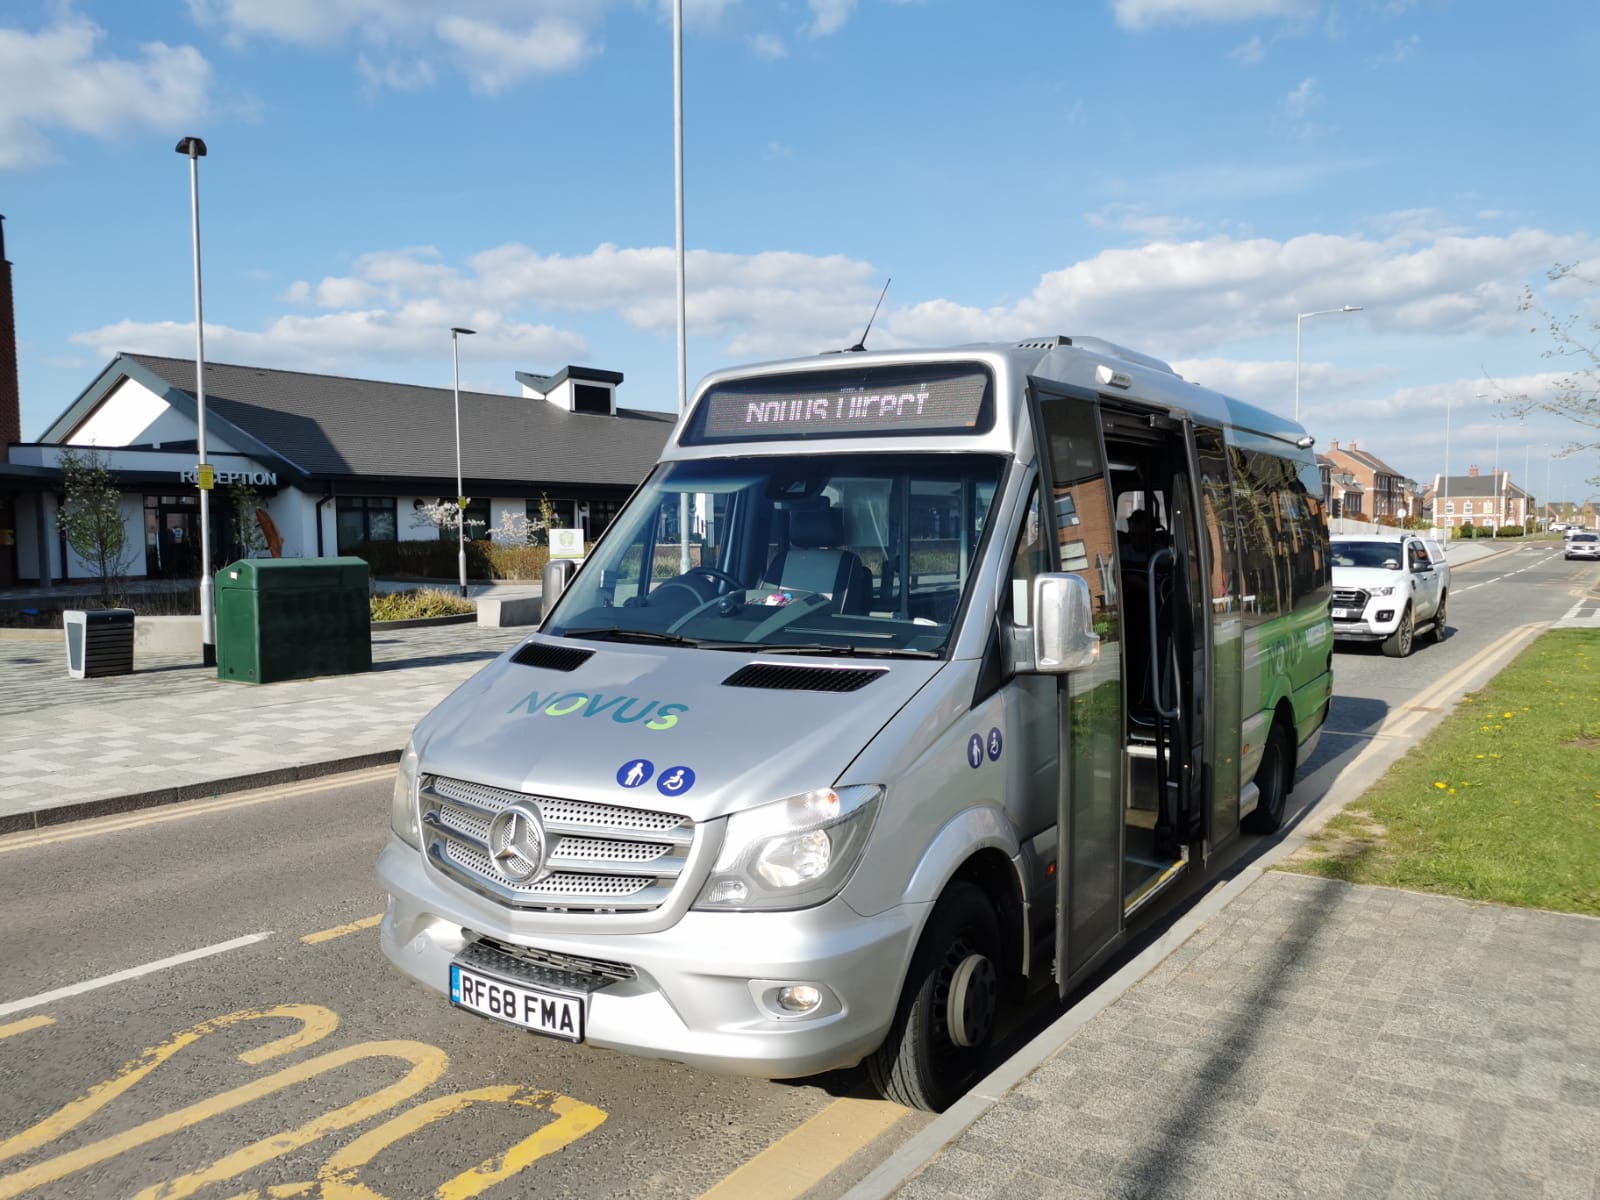 New Lubbesthorpe sustainable development sees Novus bus usage double